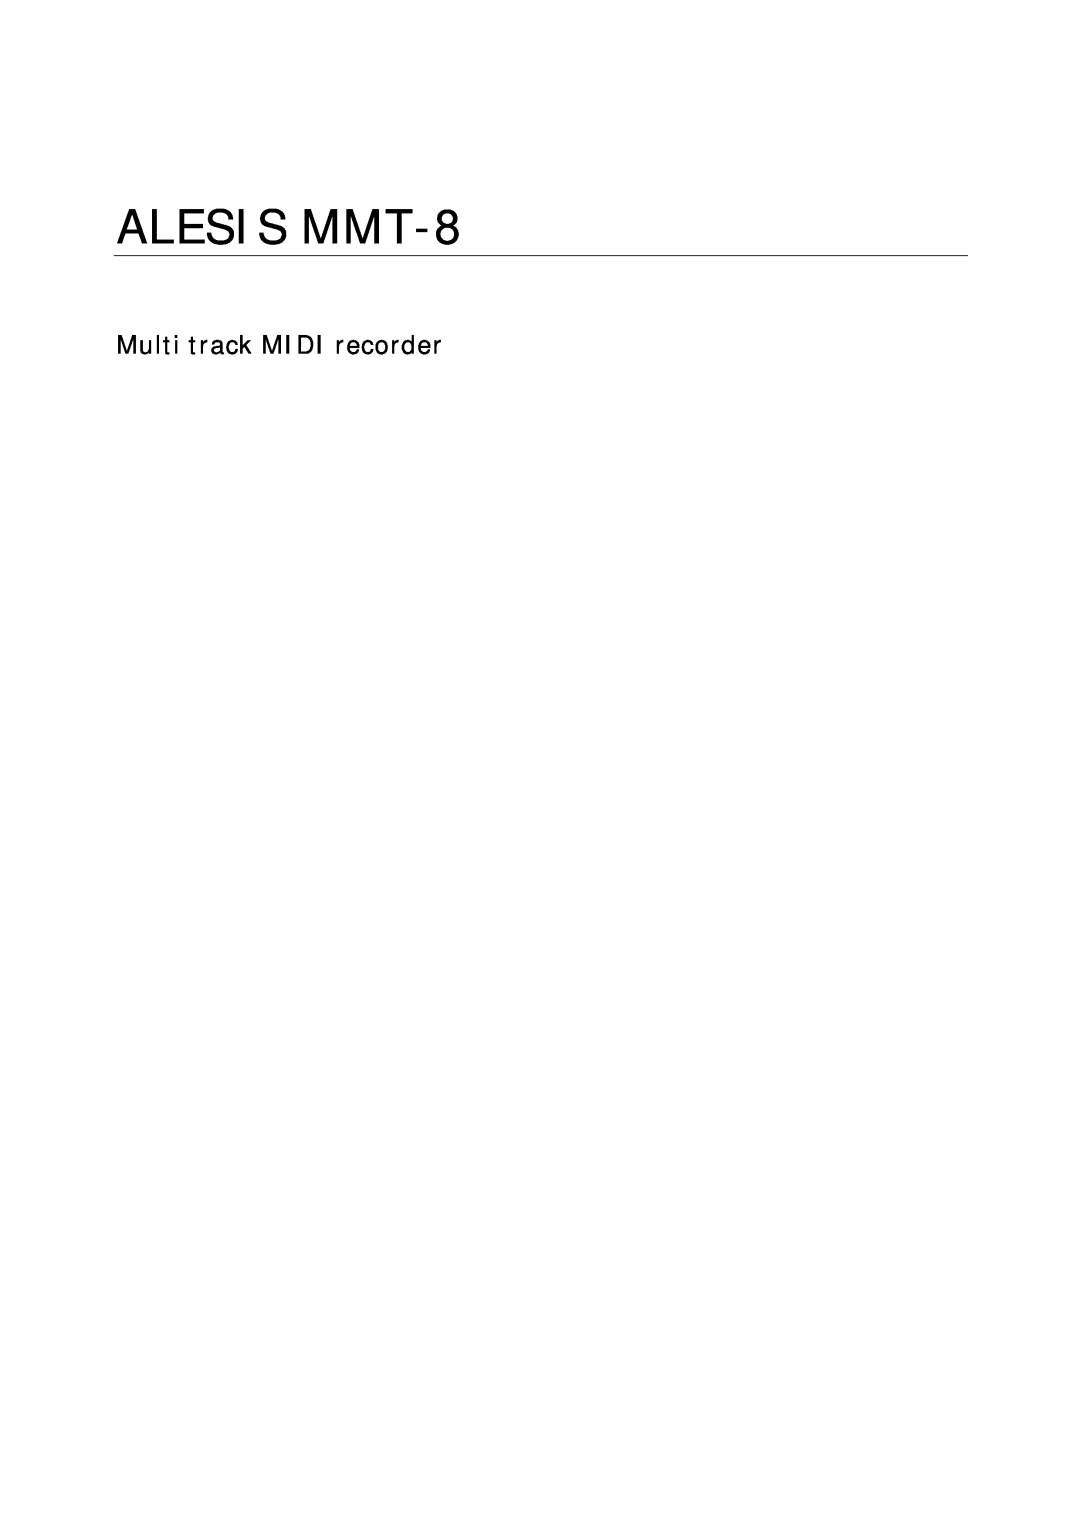 Alesis HR-16:B, MMT-8 instruction manual InstructionManual 